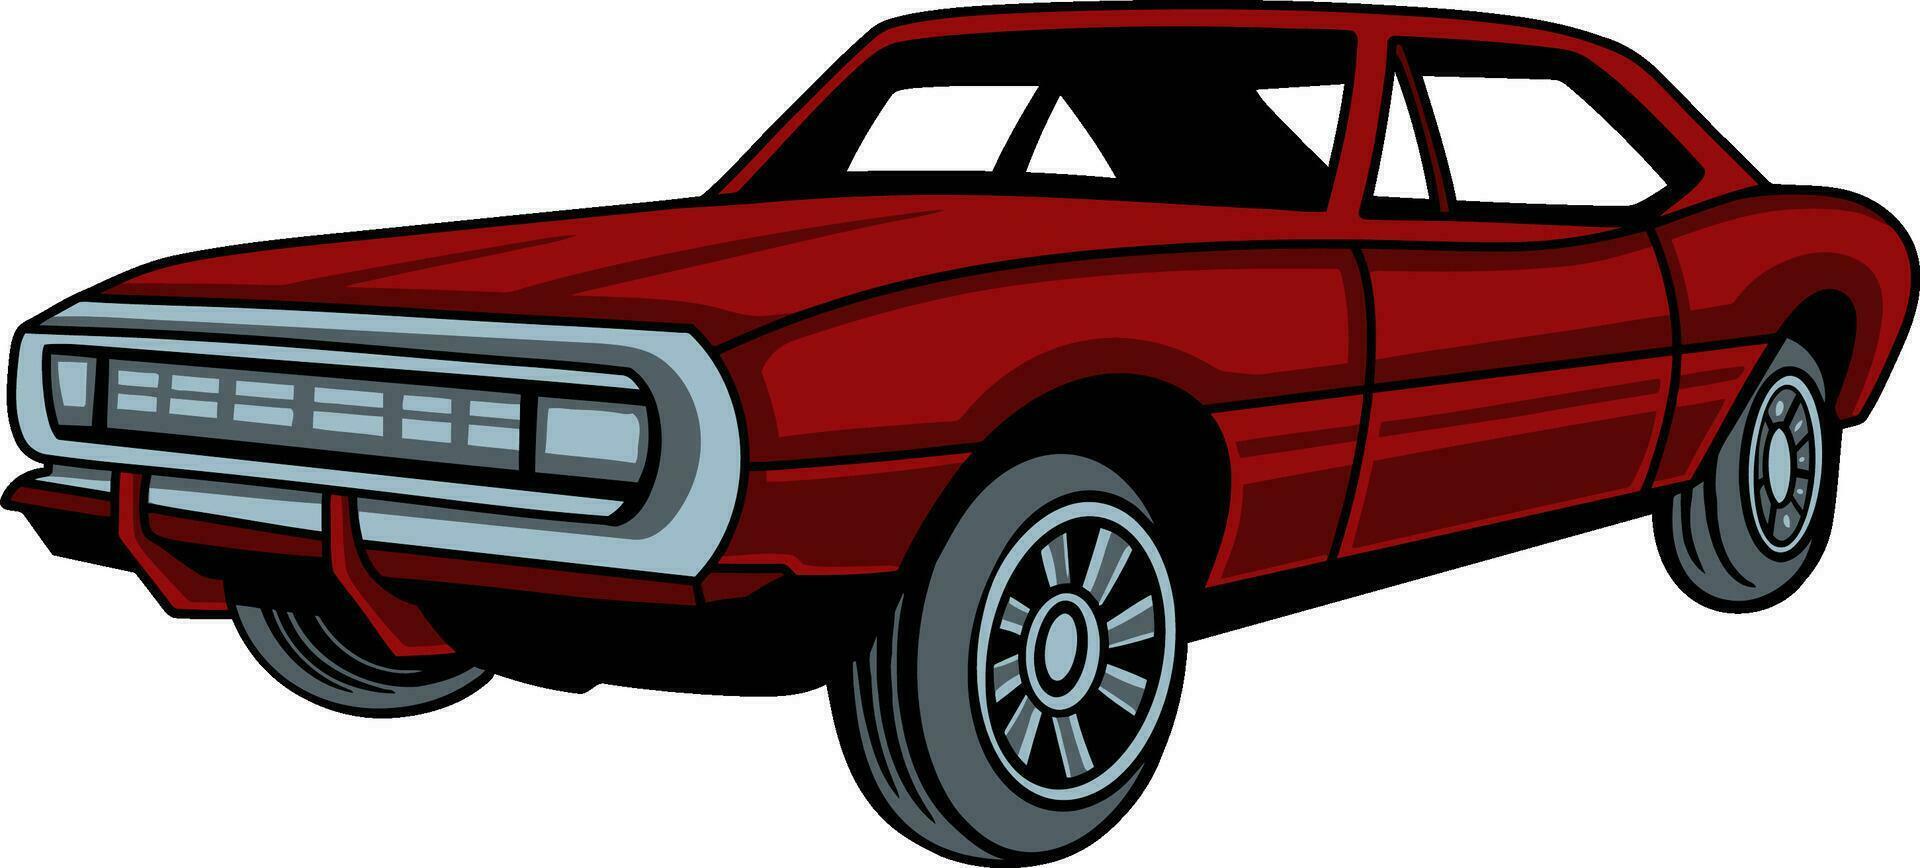 rood retro auto vector illustratie